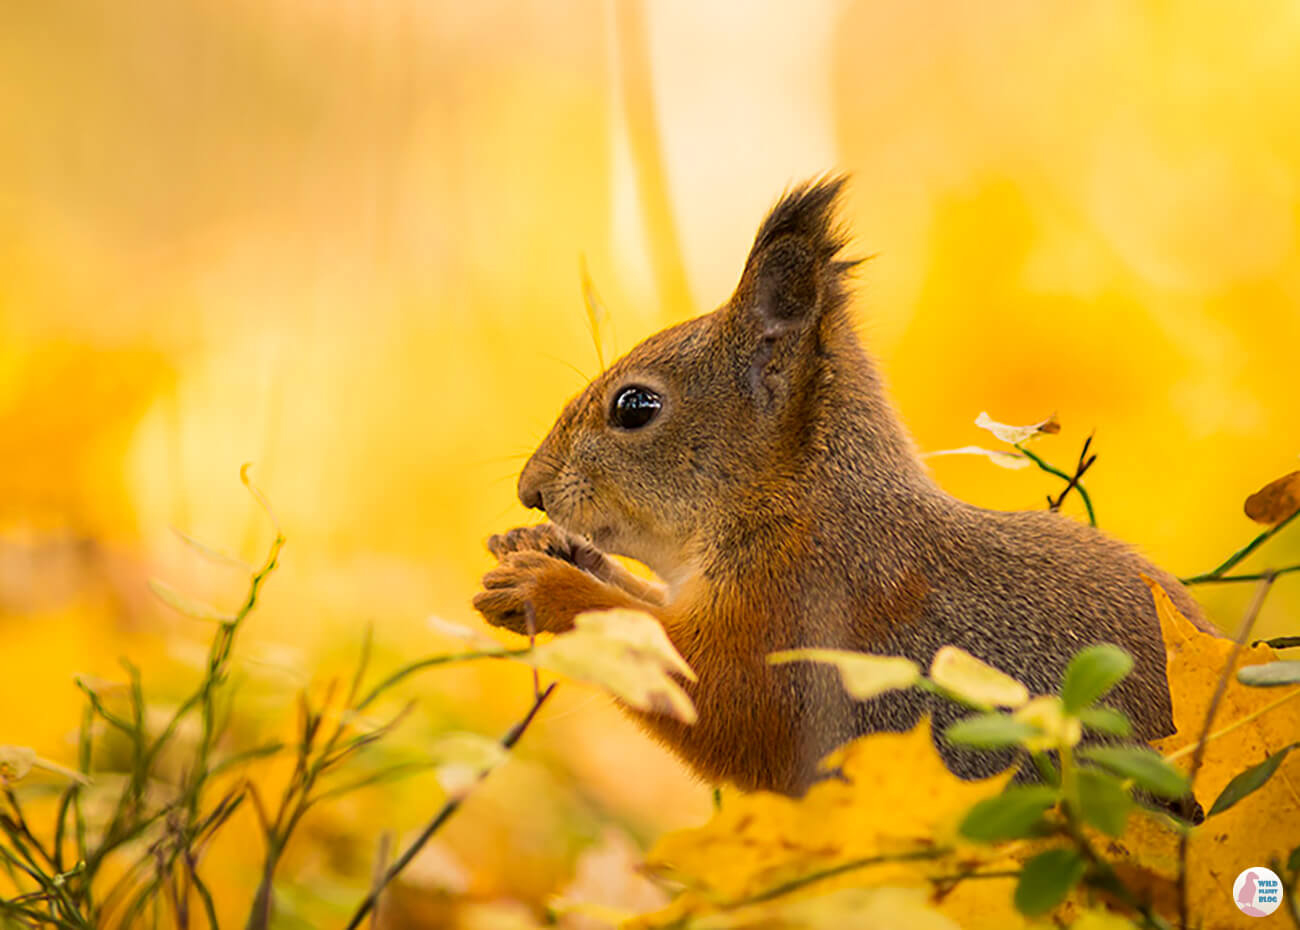 Red squirrel and autumn colors, Seurasaari, Helsinki